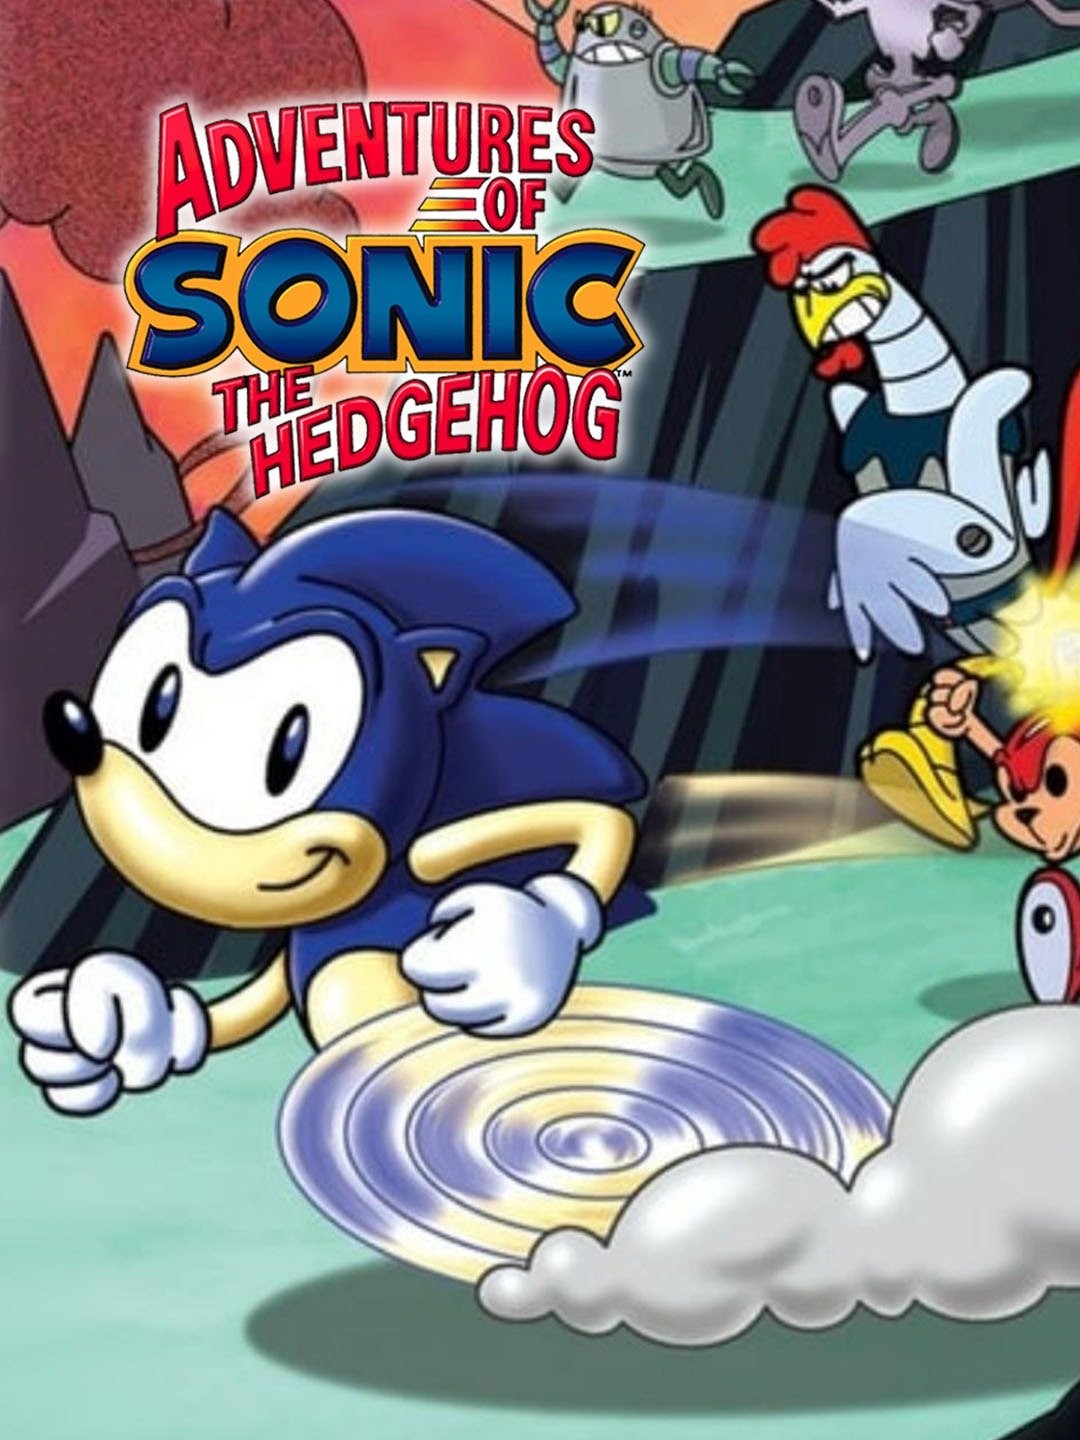 Sonic the Hedgehog 2 (Video Game 1992) - IMDb